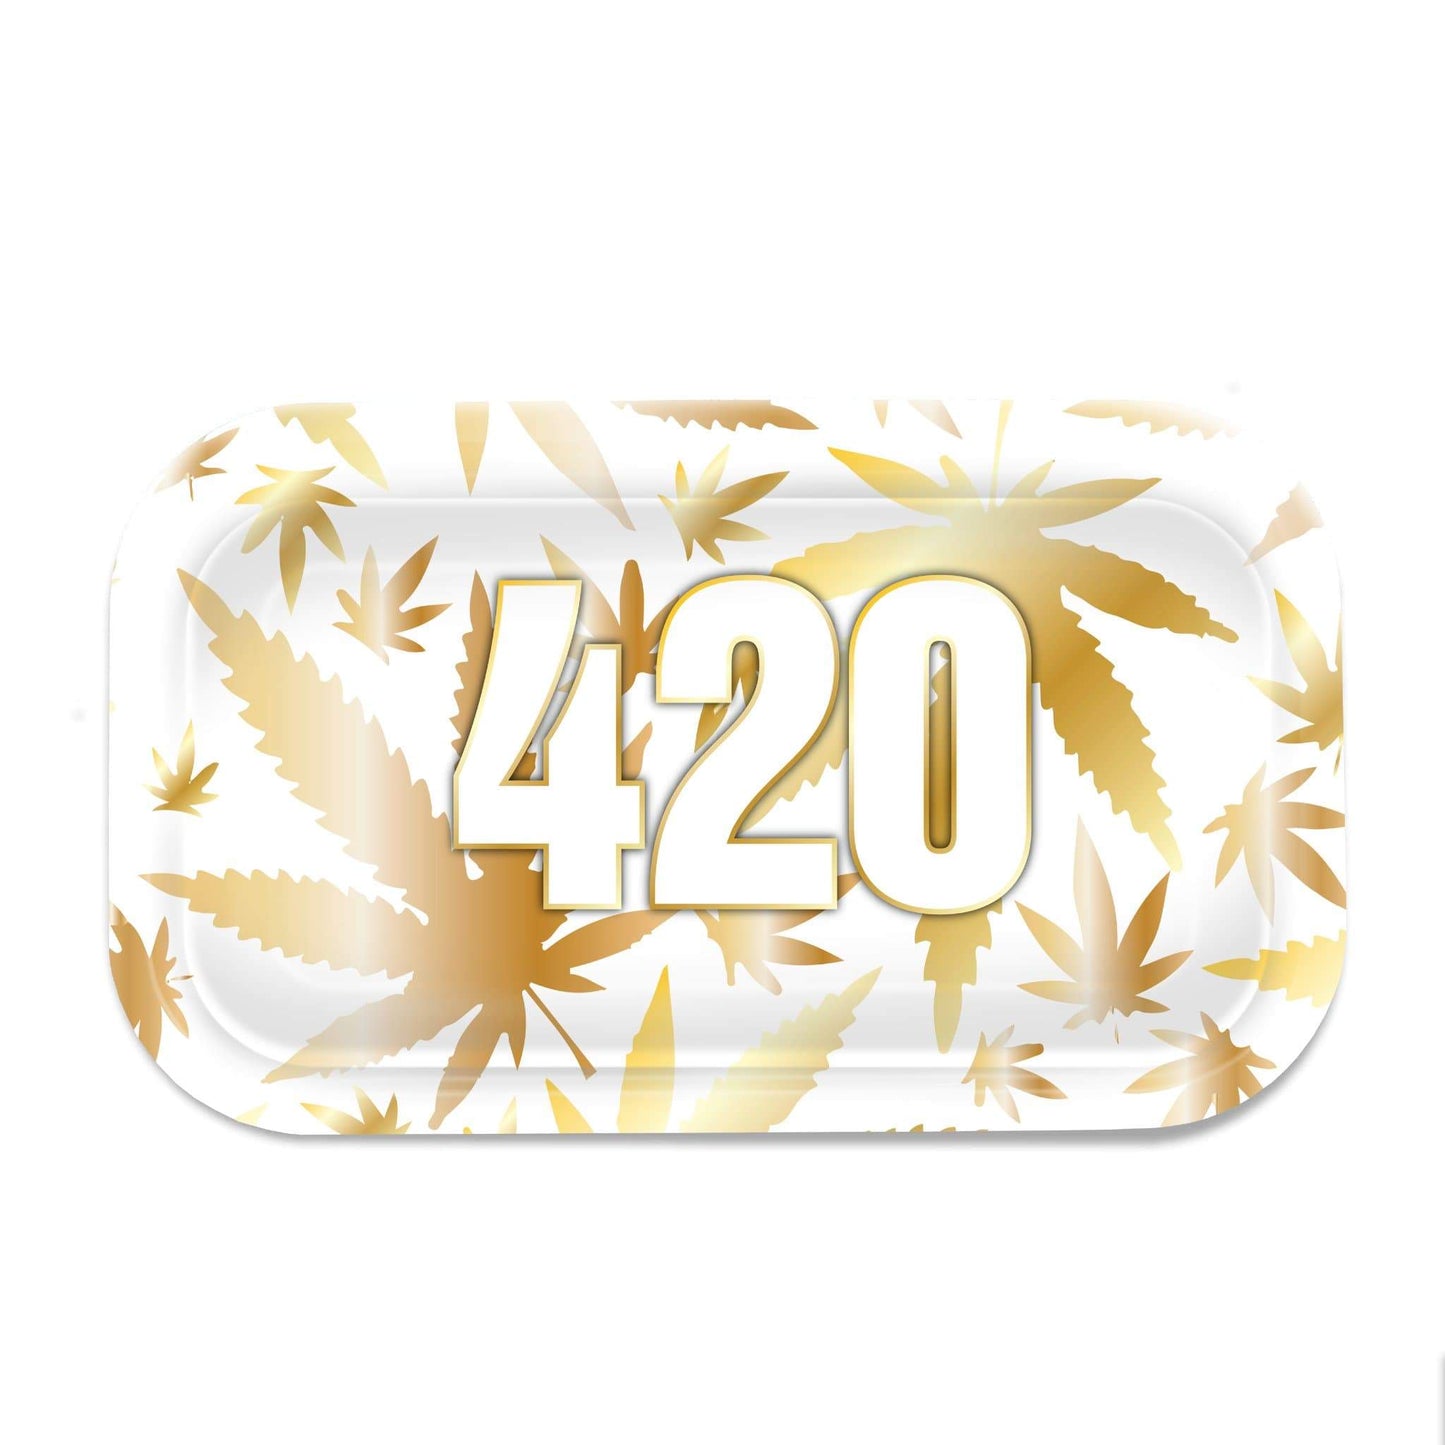 420 Gold Metal Rollin' Tray